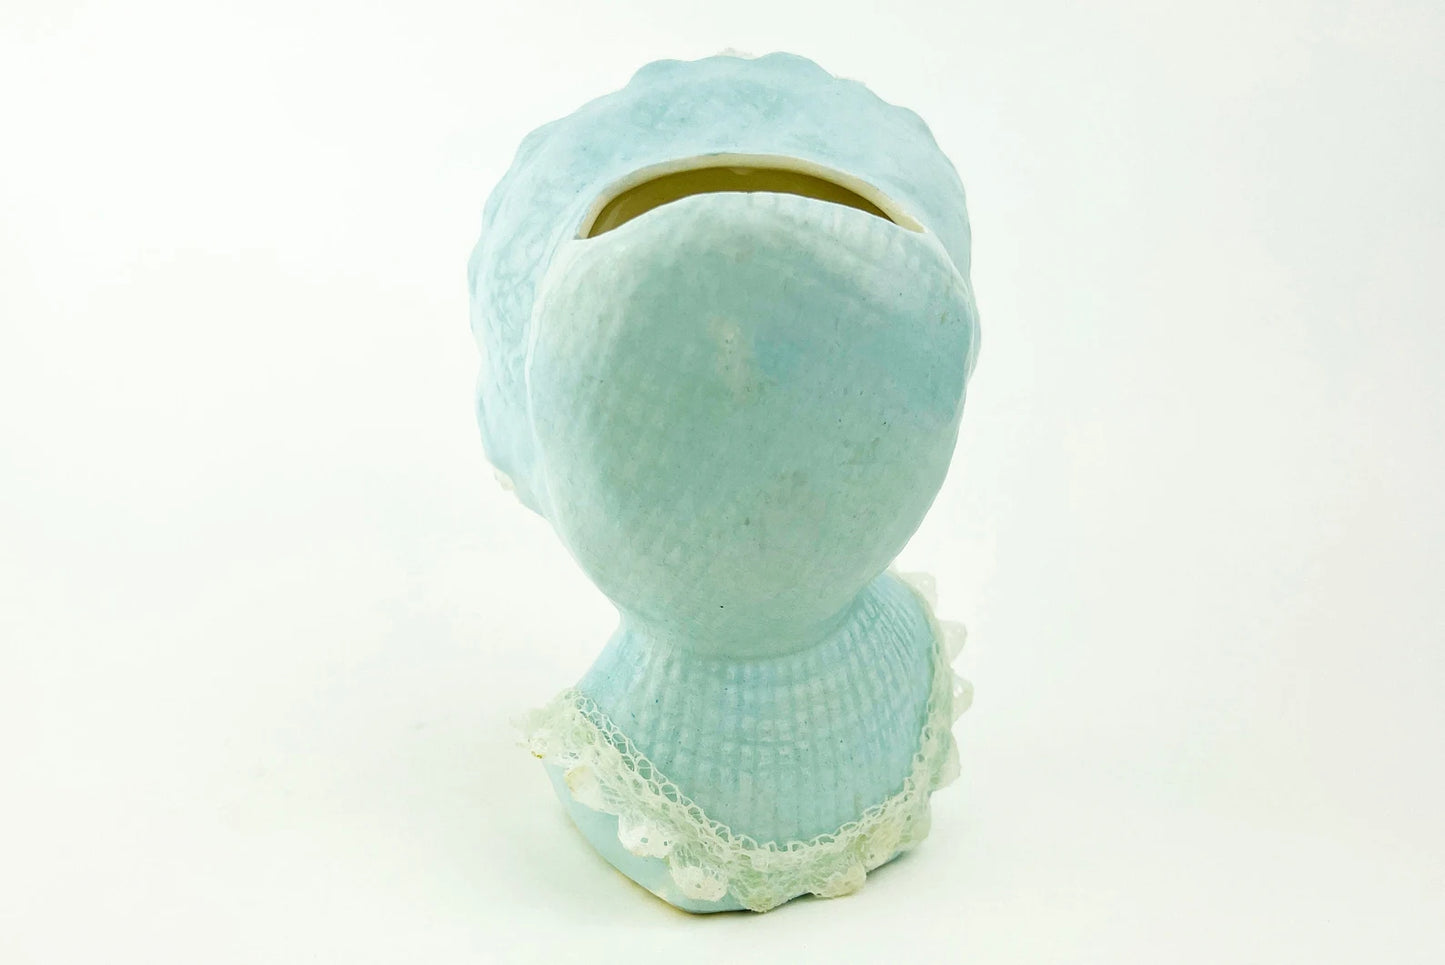 Vintage Blue Baby Ceramic Head Vase, Flower buds on Pink Bonnet, Whimsical Planter, Mid Century Kitschy Nursery Decor UCAGO Japan